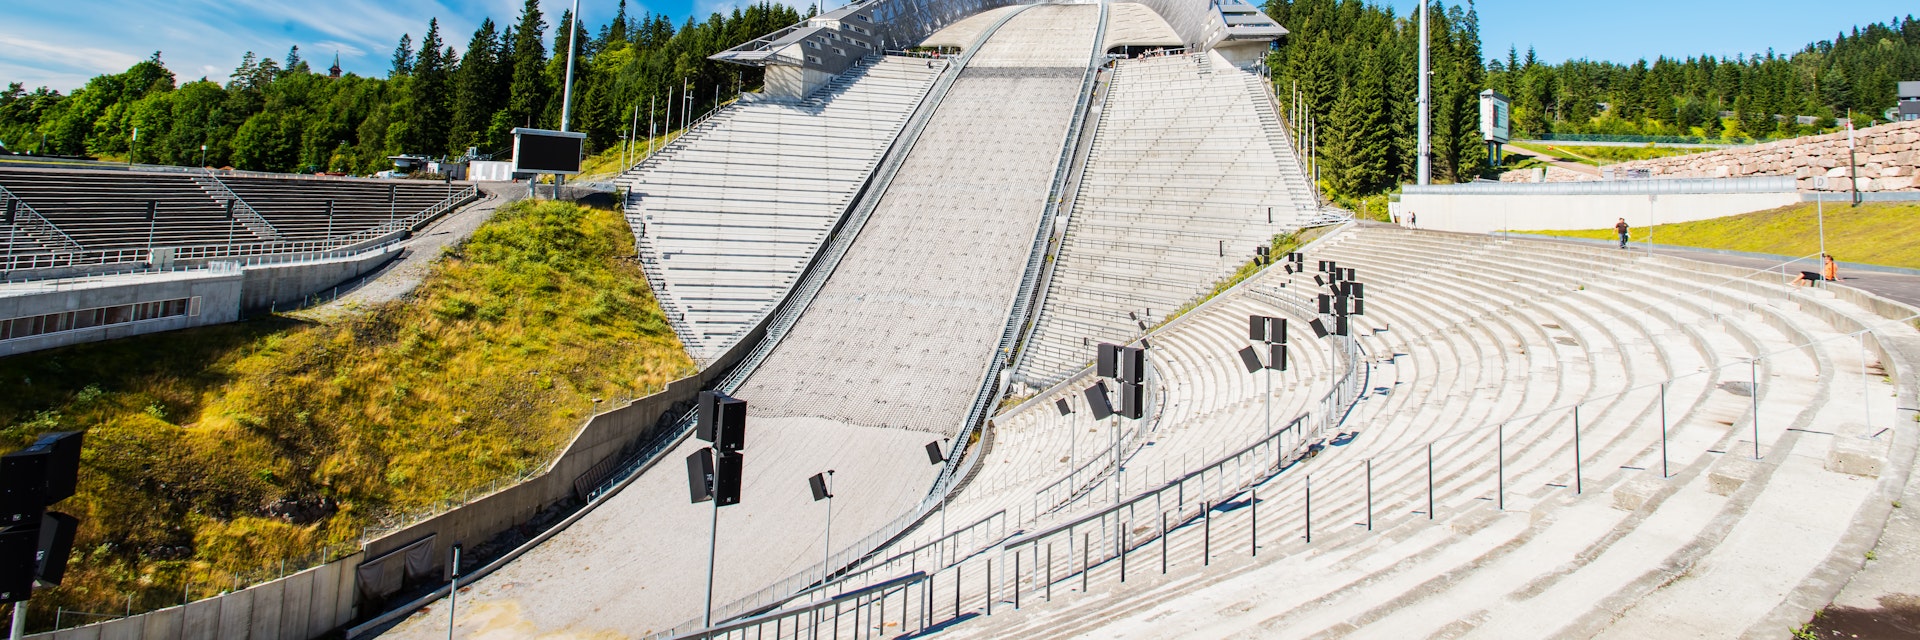 Holmenkollbakken Ski Jump located in Oslo, Norway.